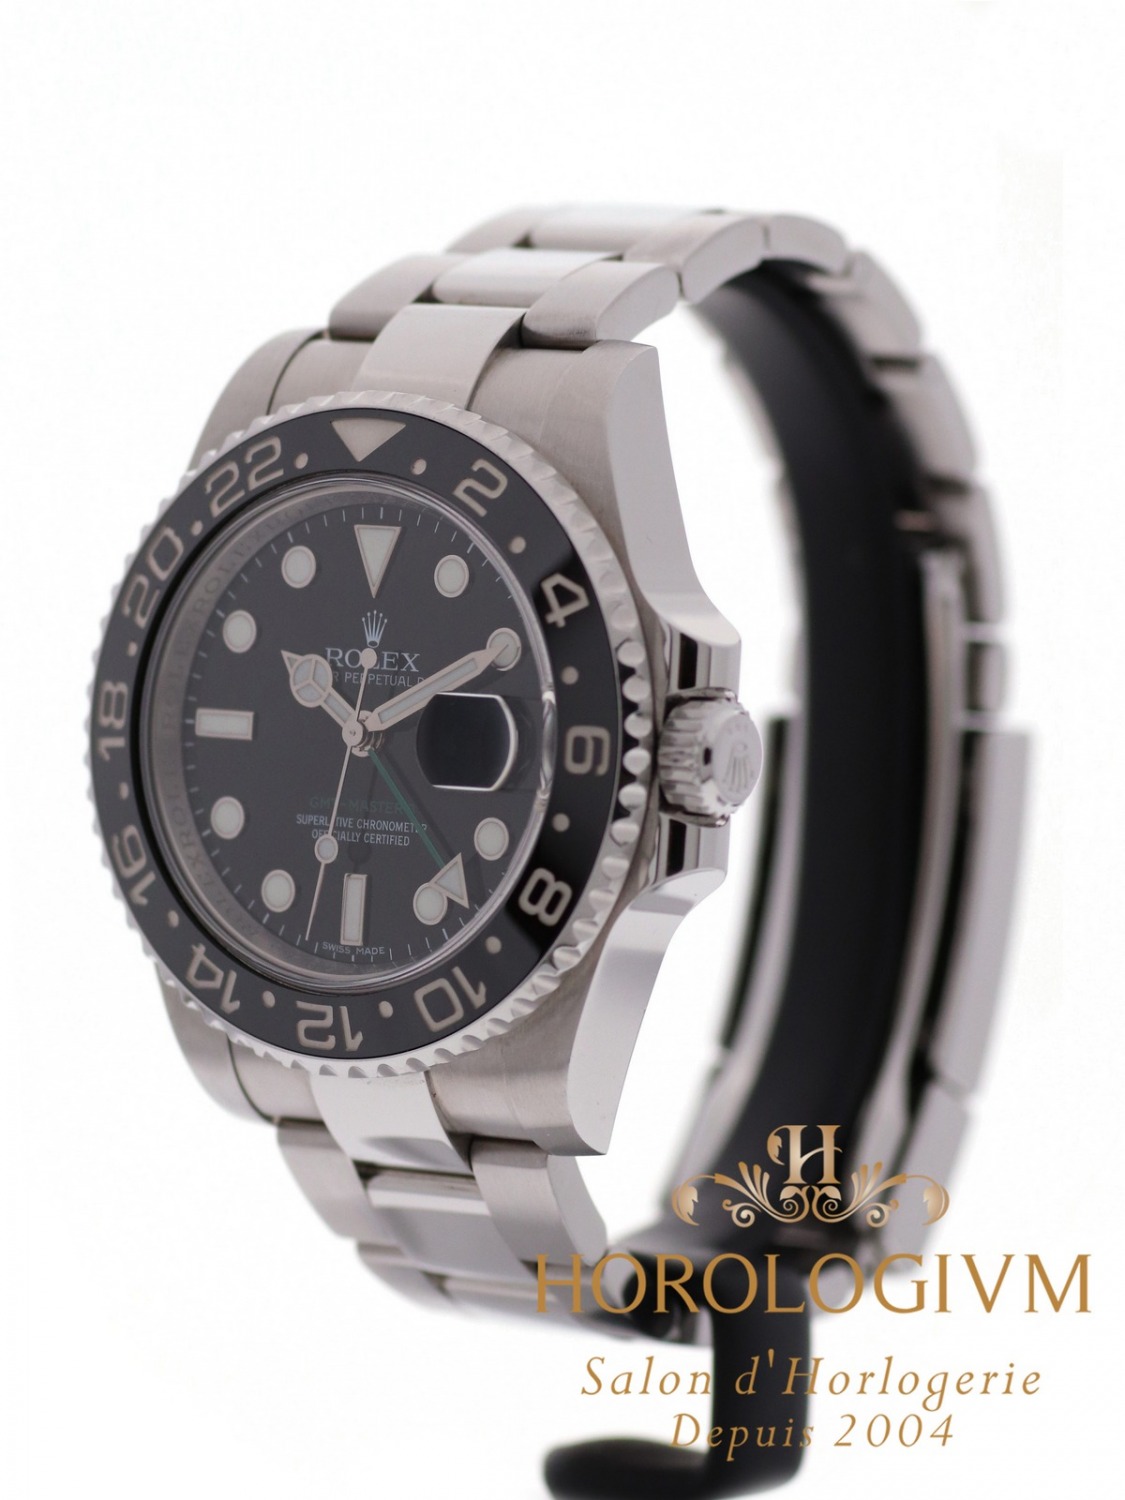 Rolex GMT Master II “random serial” watch, silver (case) and black (bezel)